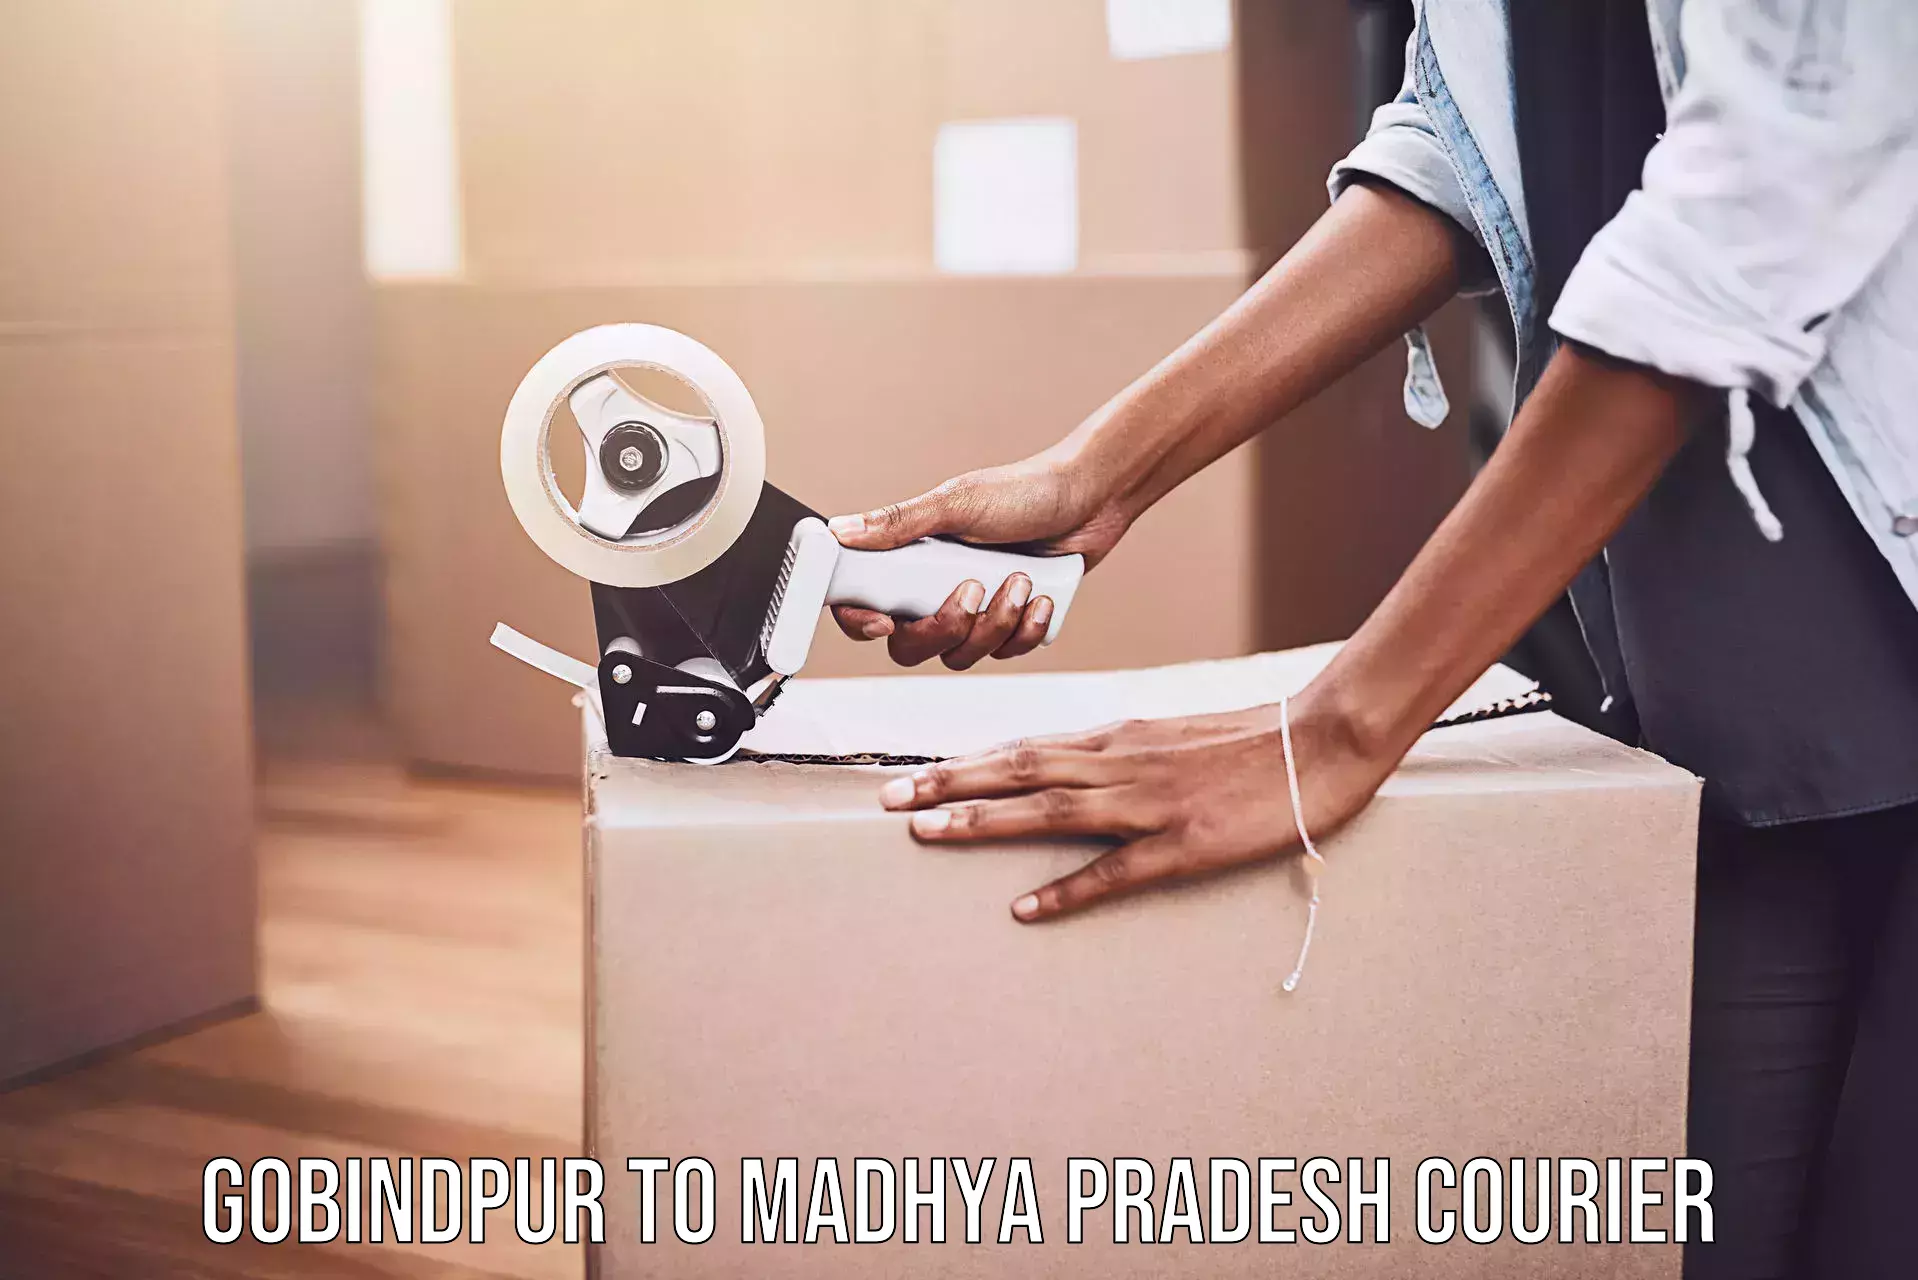 Cash on delivery service Gobindpur to Madhya Pradesh